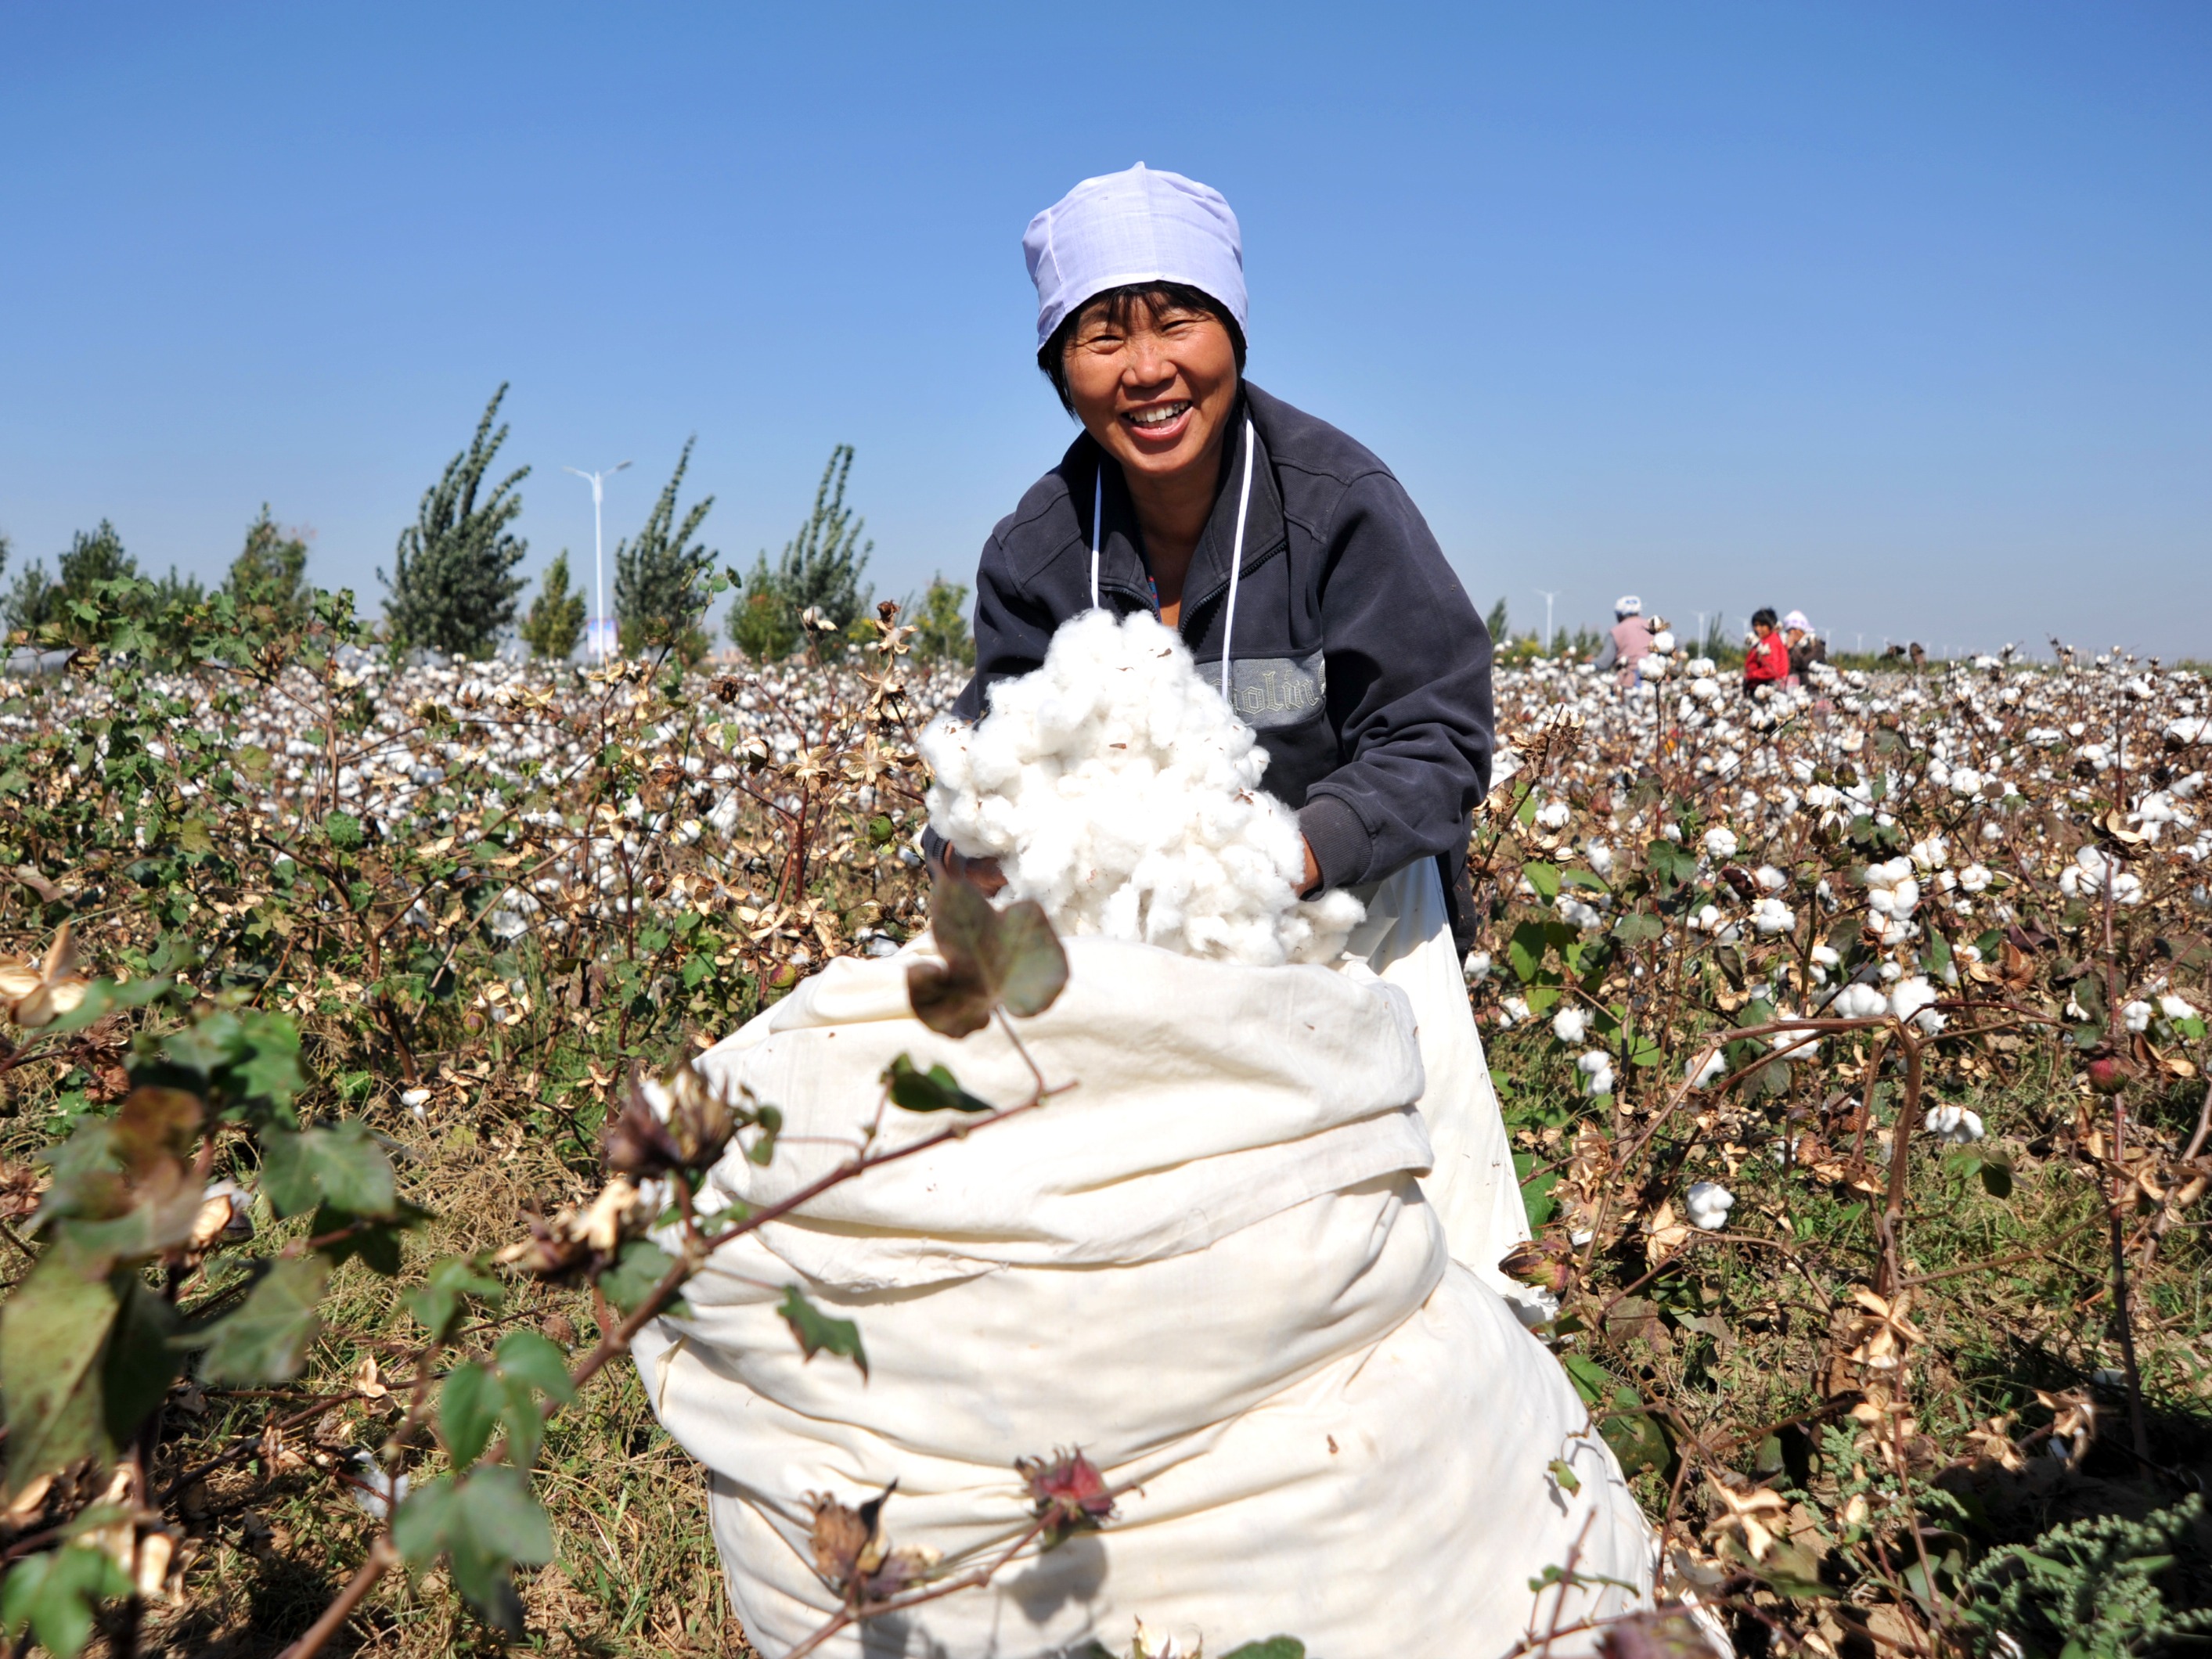 Cotton Production in Thousand Metric Tonnes:  6,532